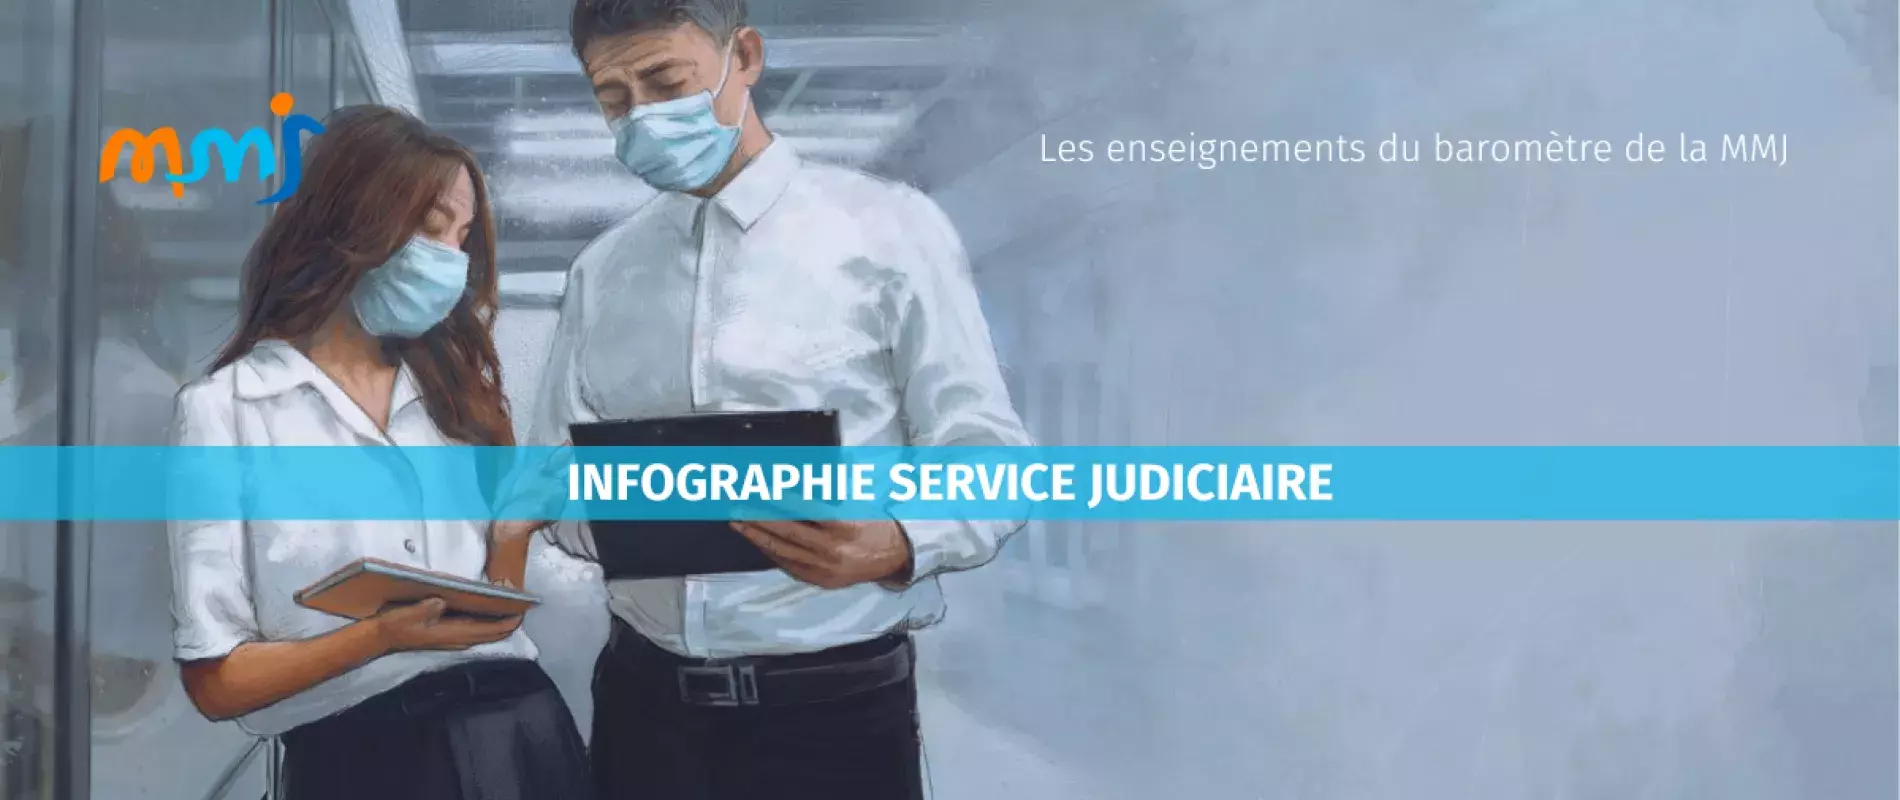 infographie_service_judiciaire_2022_barometre_sante_mmj